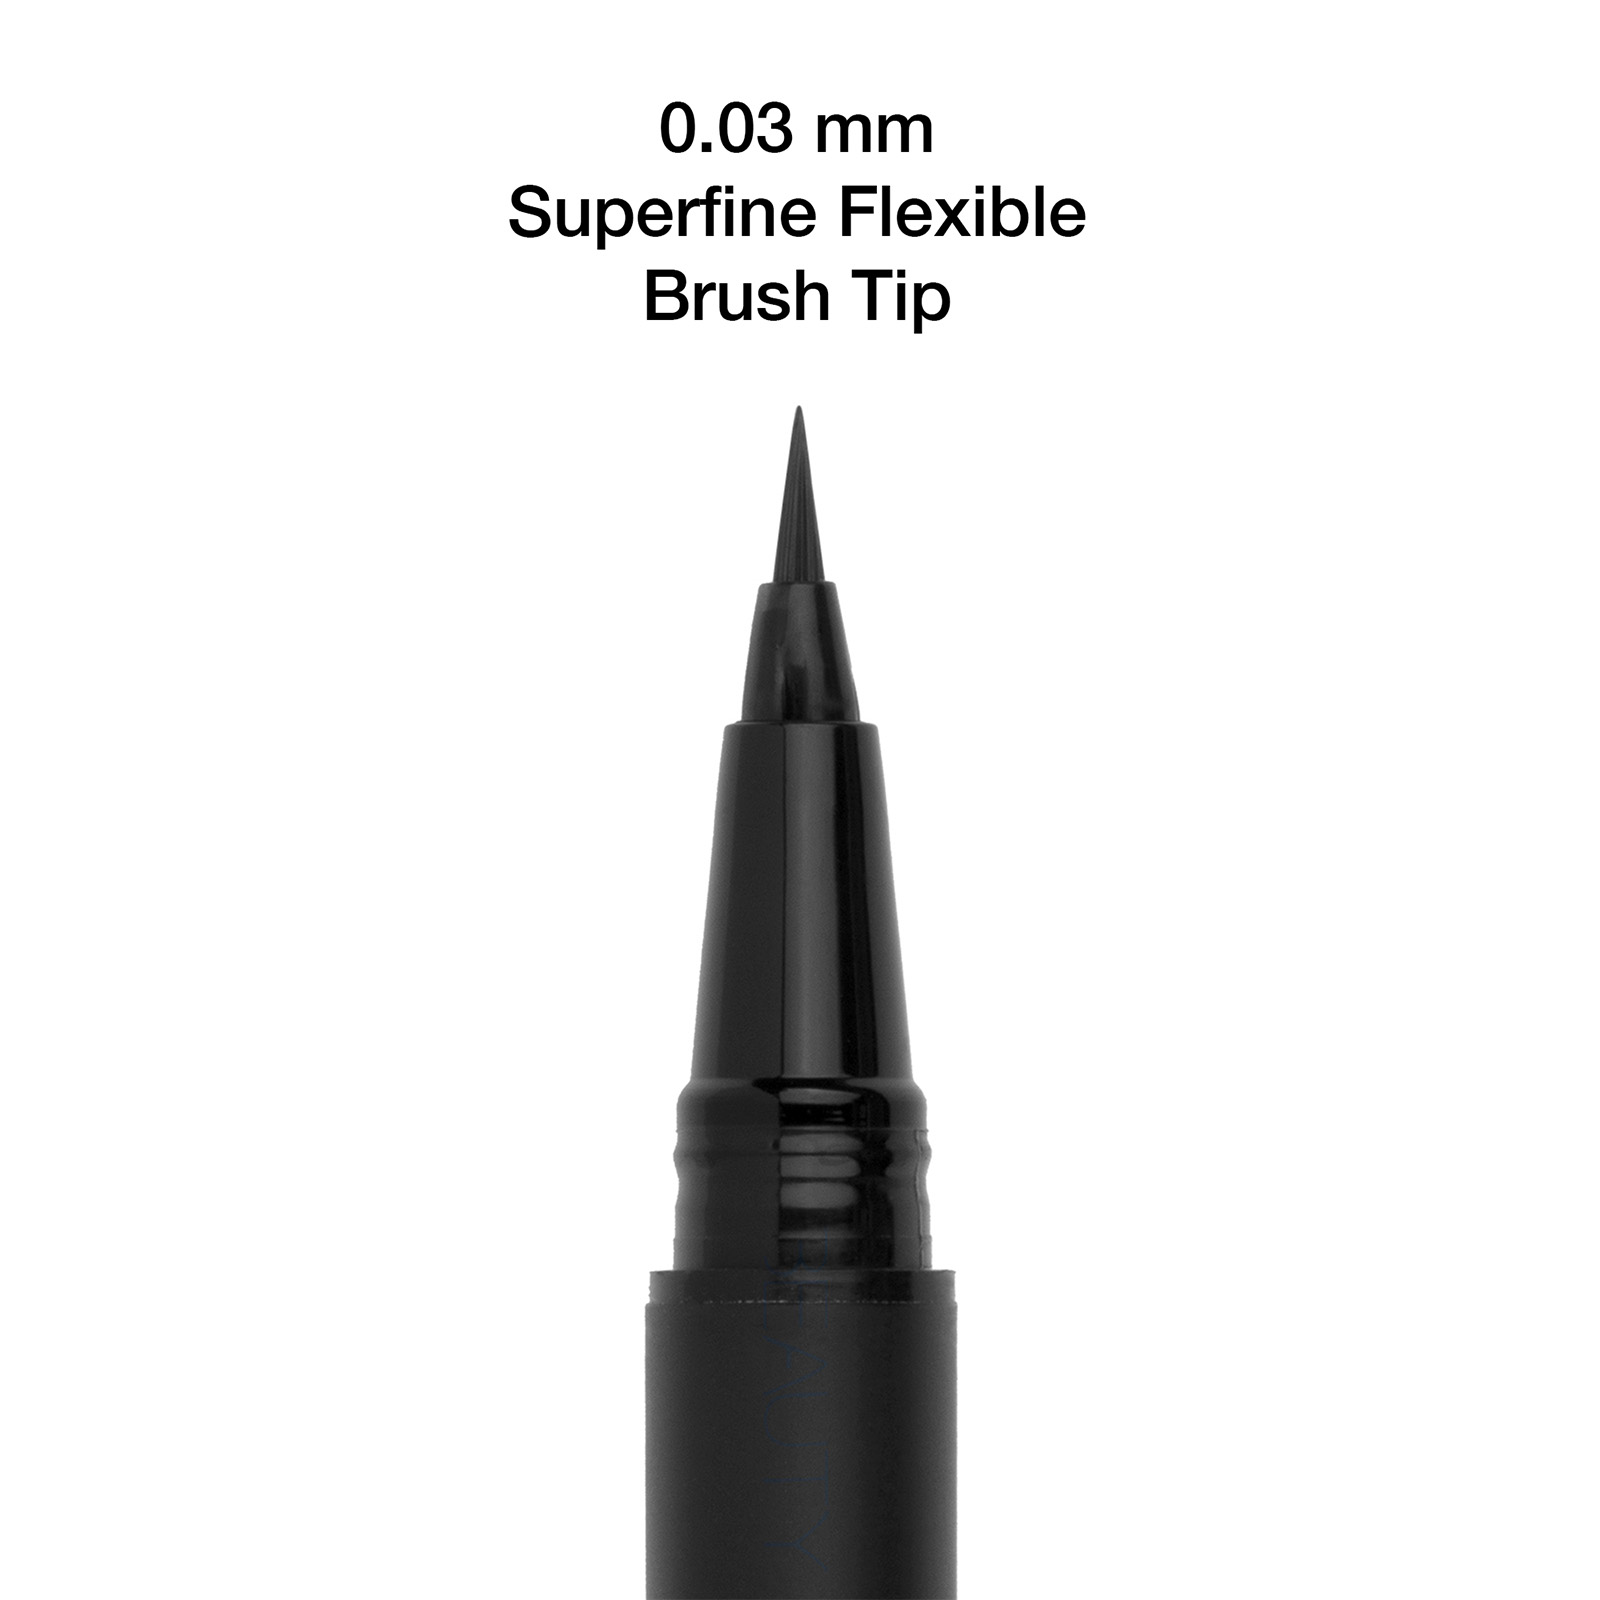 0.03mm Superfine Flexiable Brush Tip